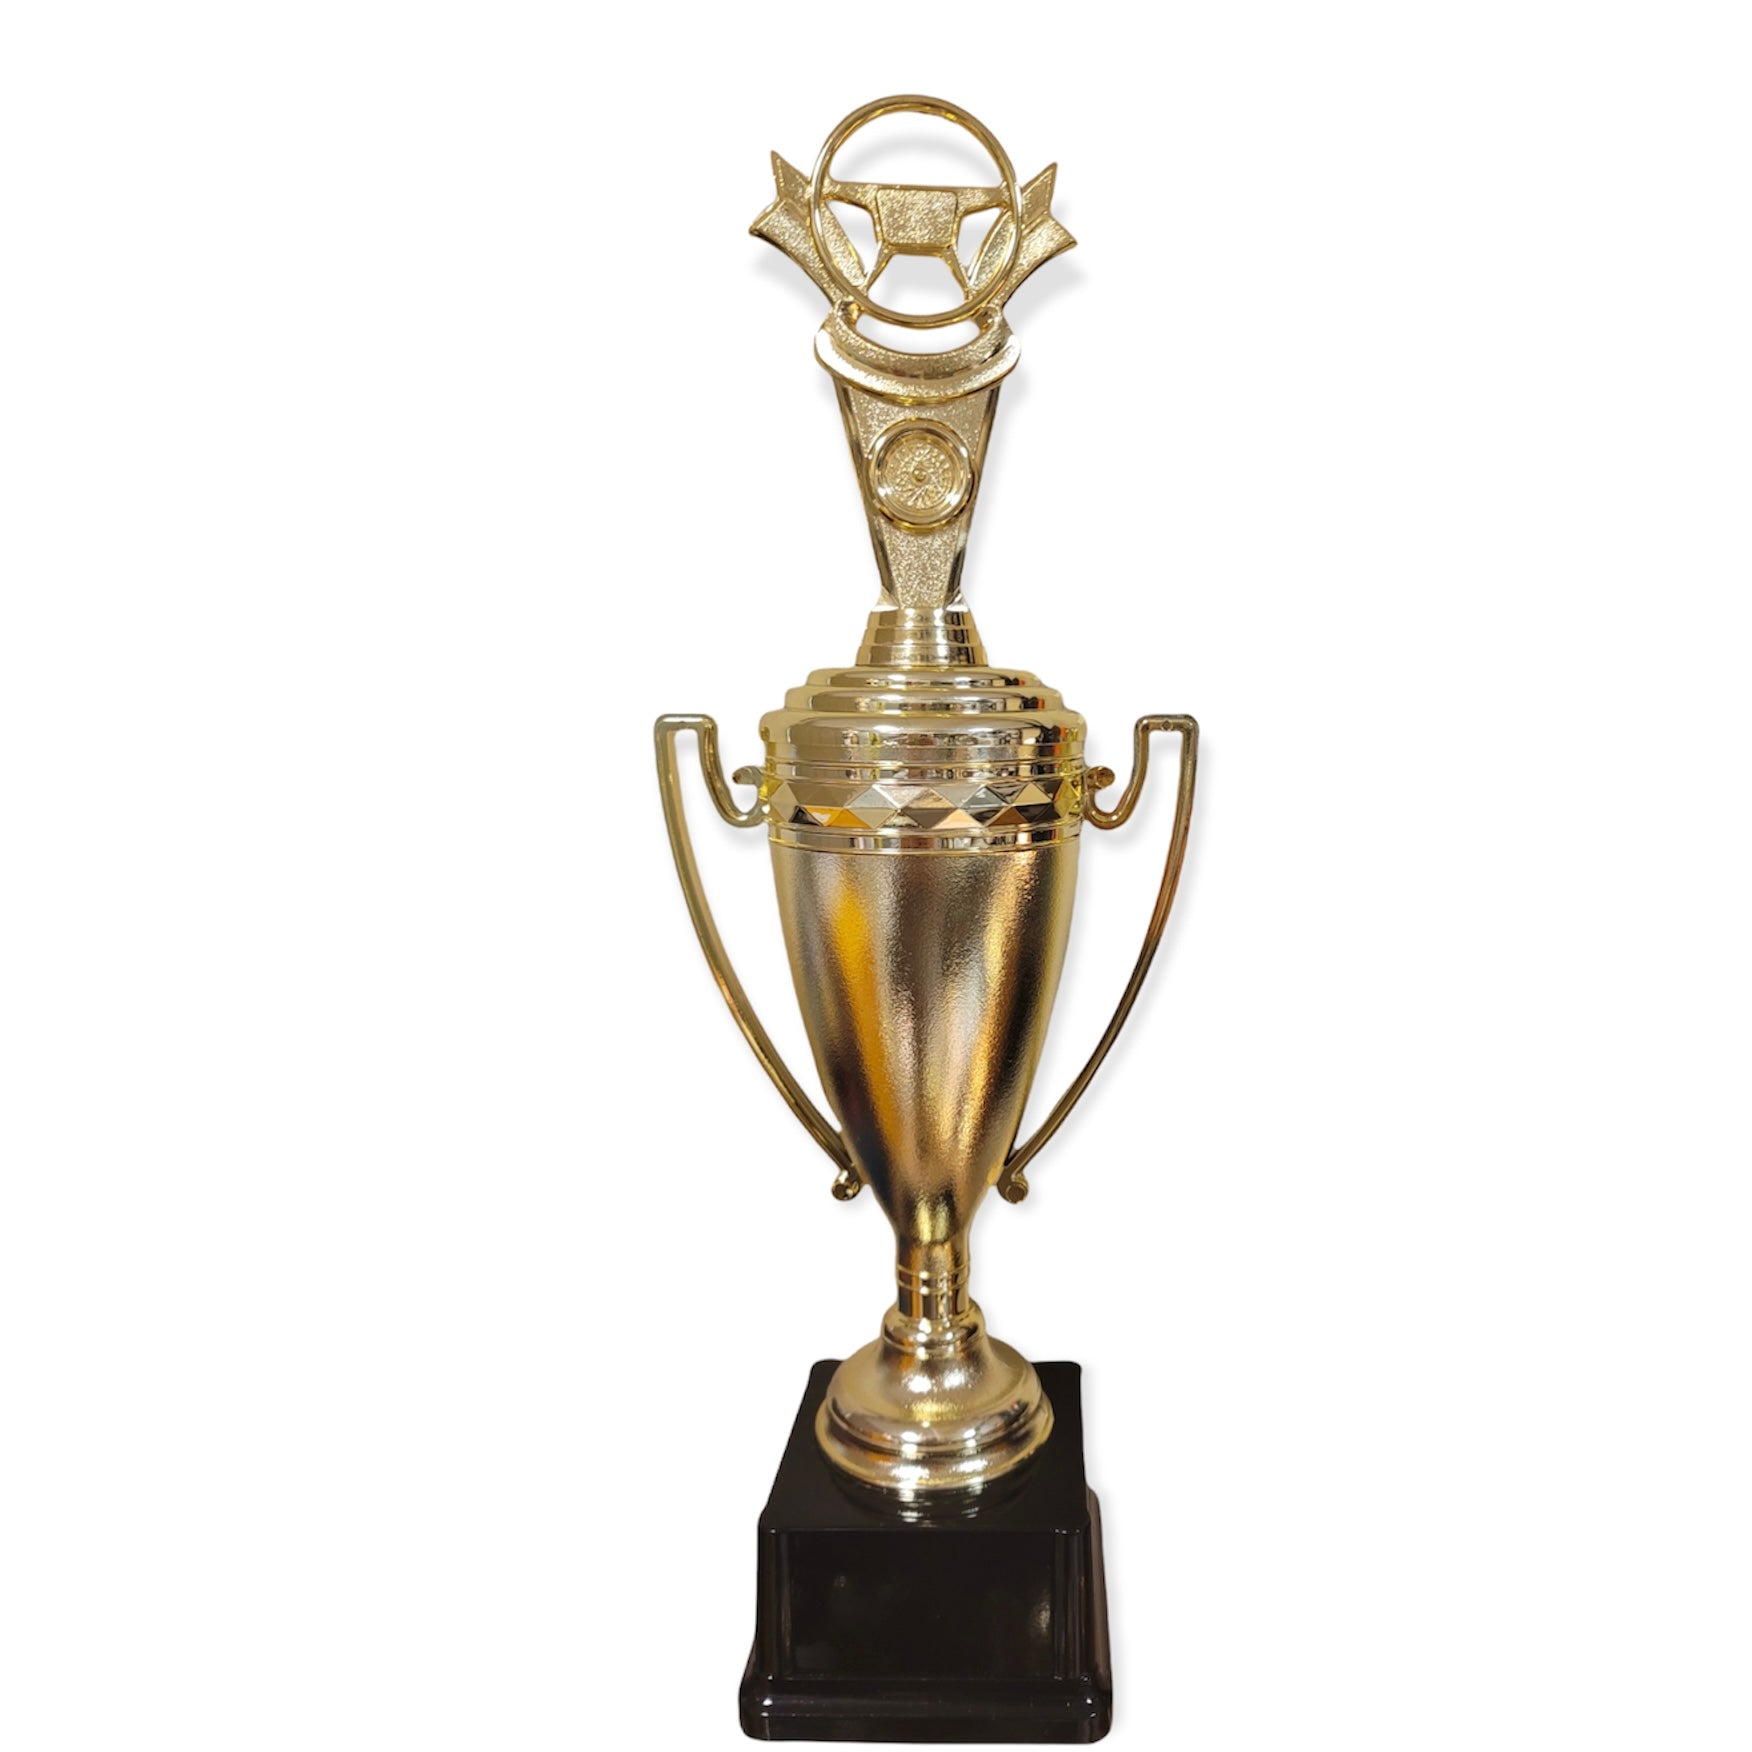 Car Show Trophy - Steering Wheel Cup